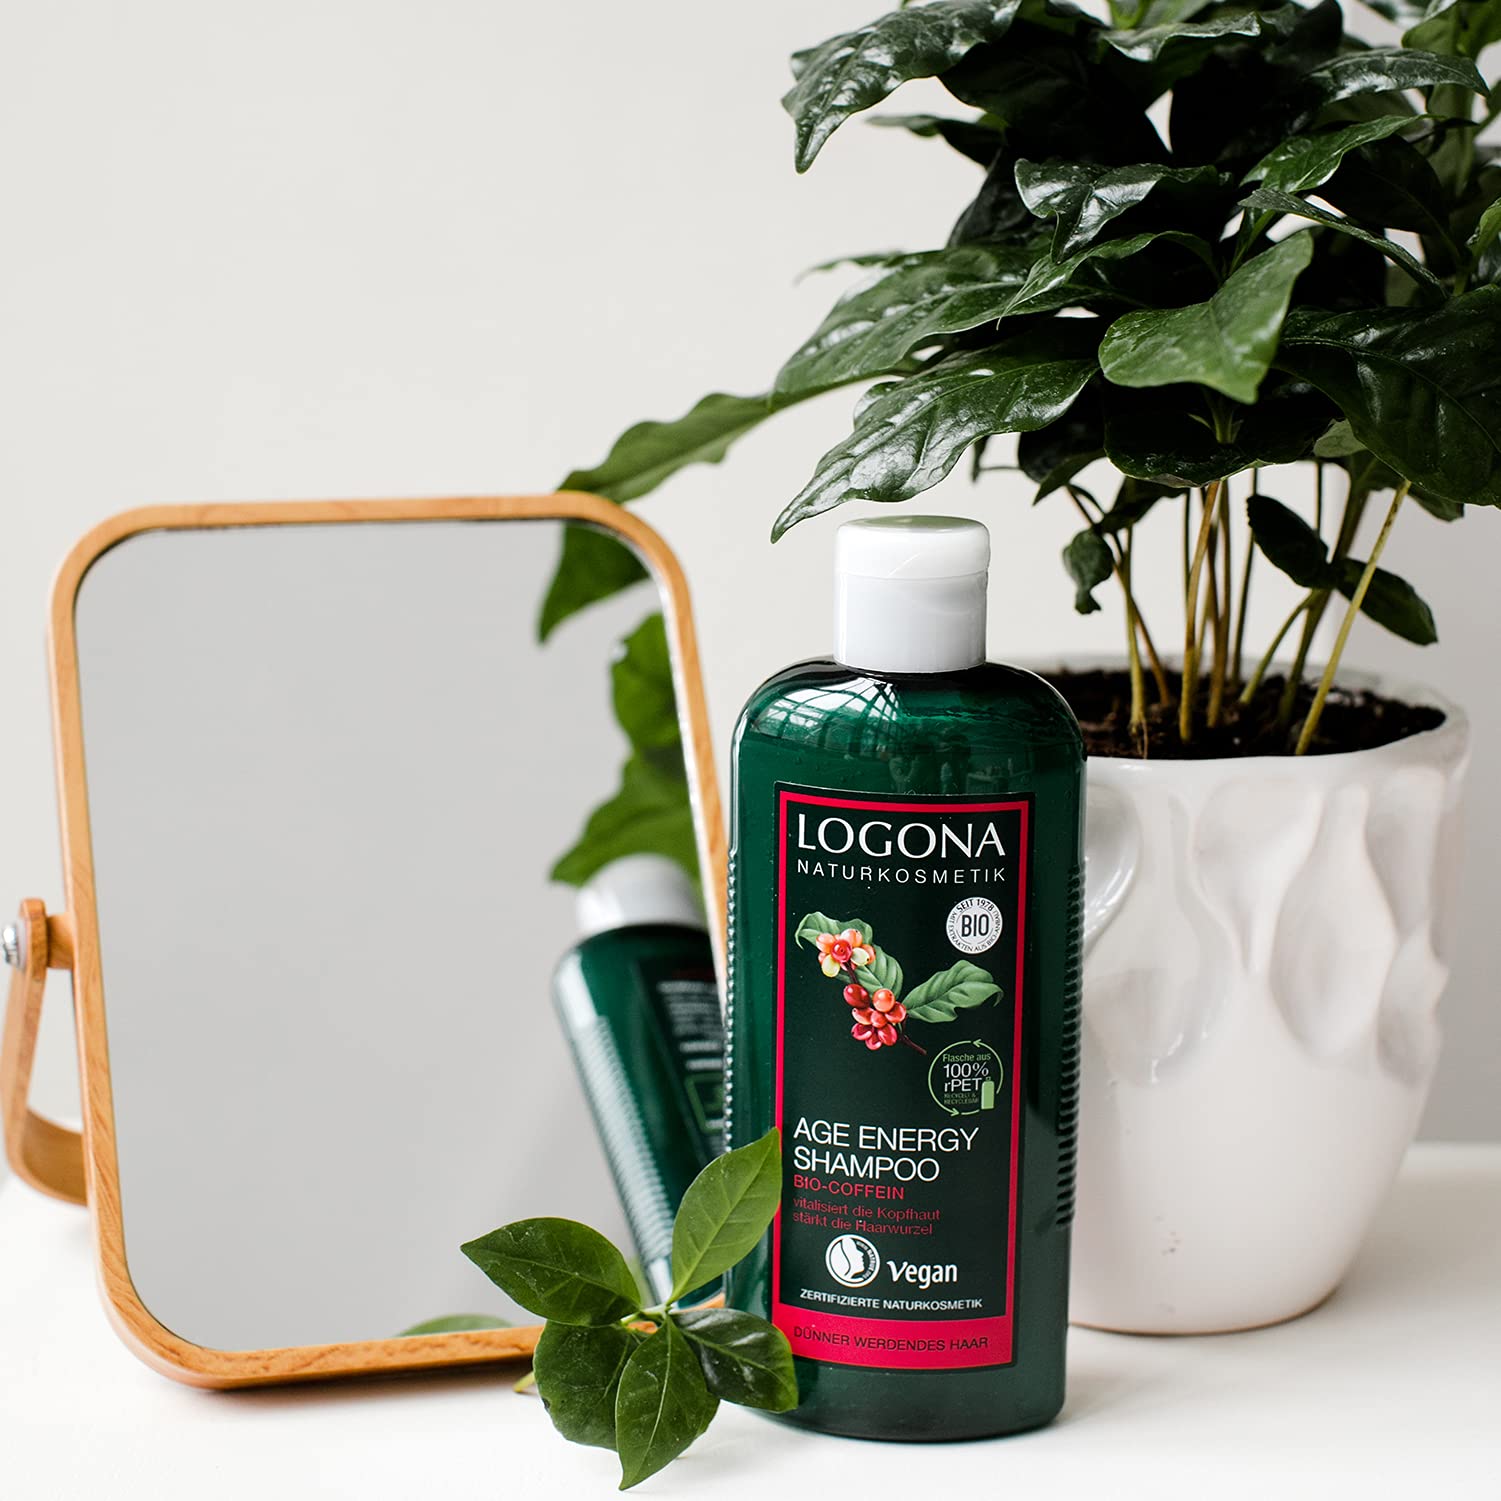 Mua Logona Natural Cosmetics Energy Đức Shampoo hãng chính Organic | Age Fado trên Amazon 2023 Caffeine